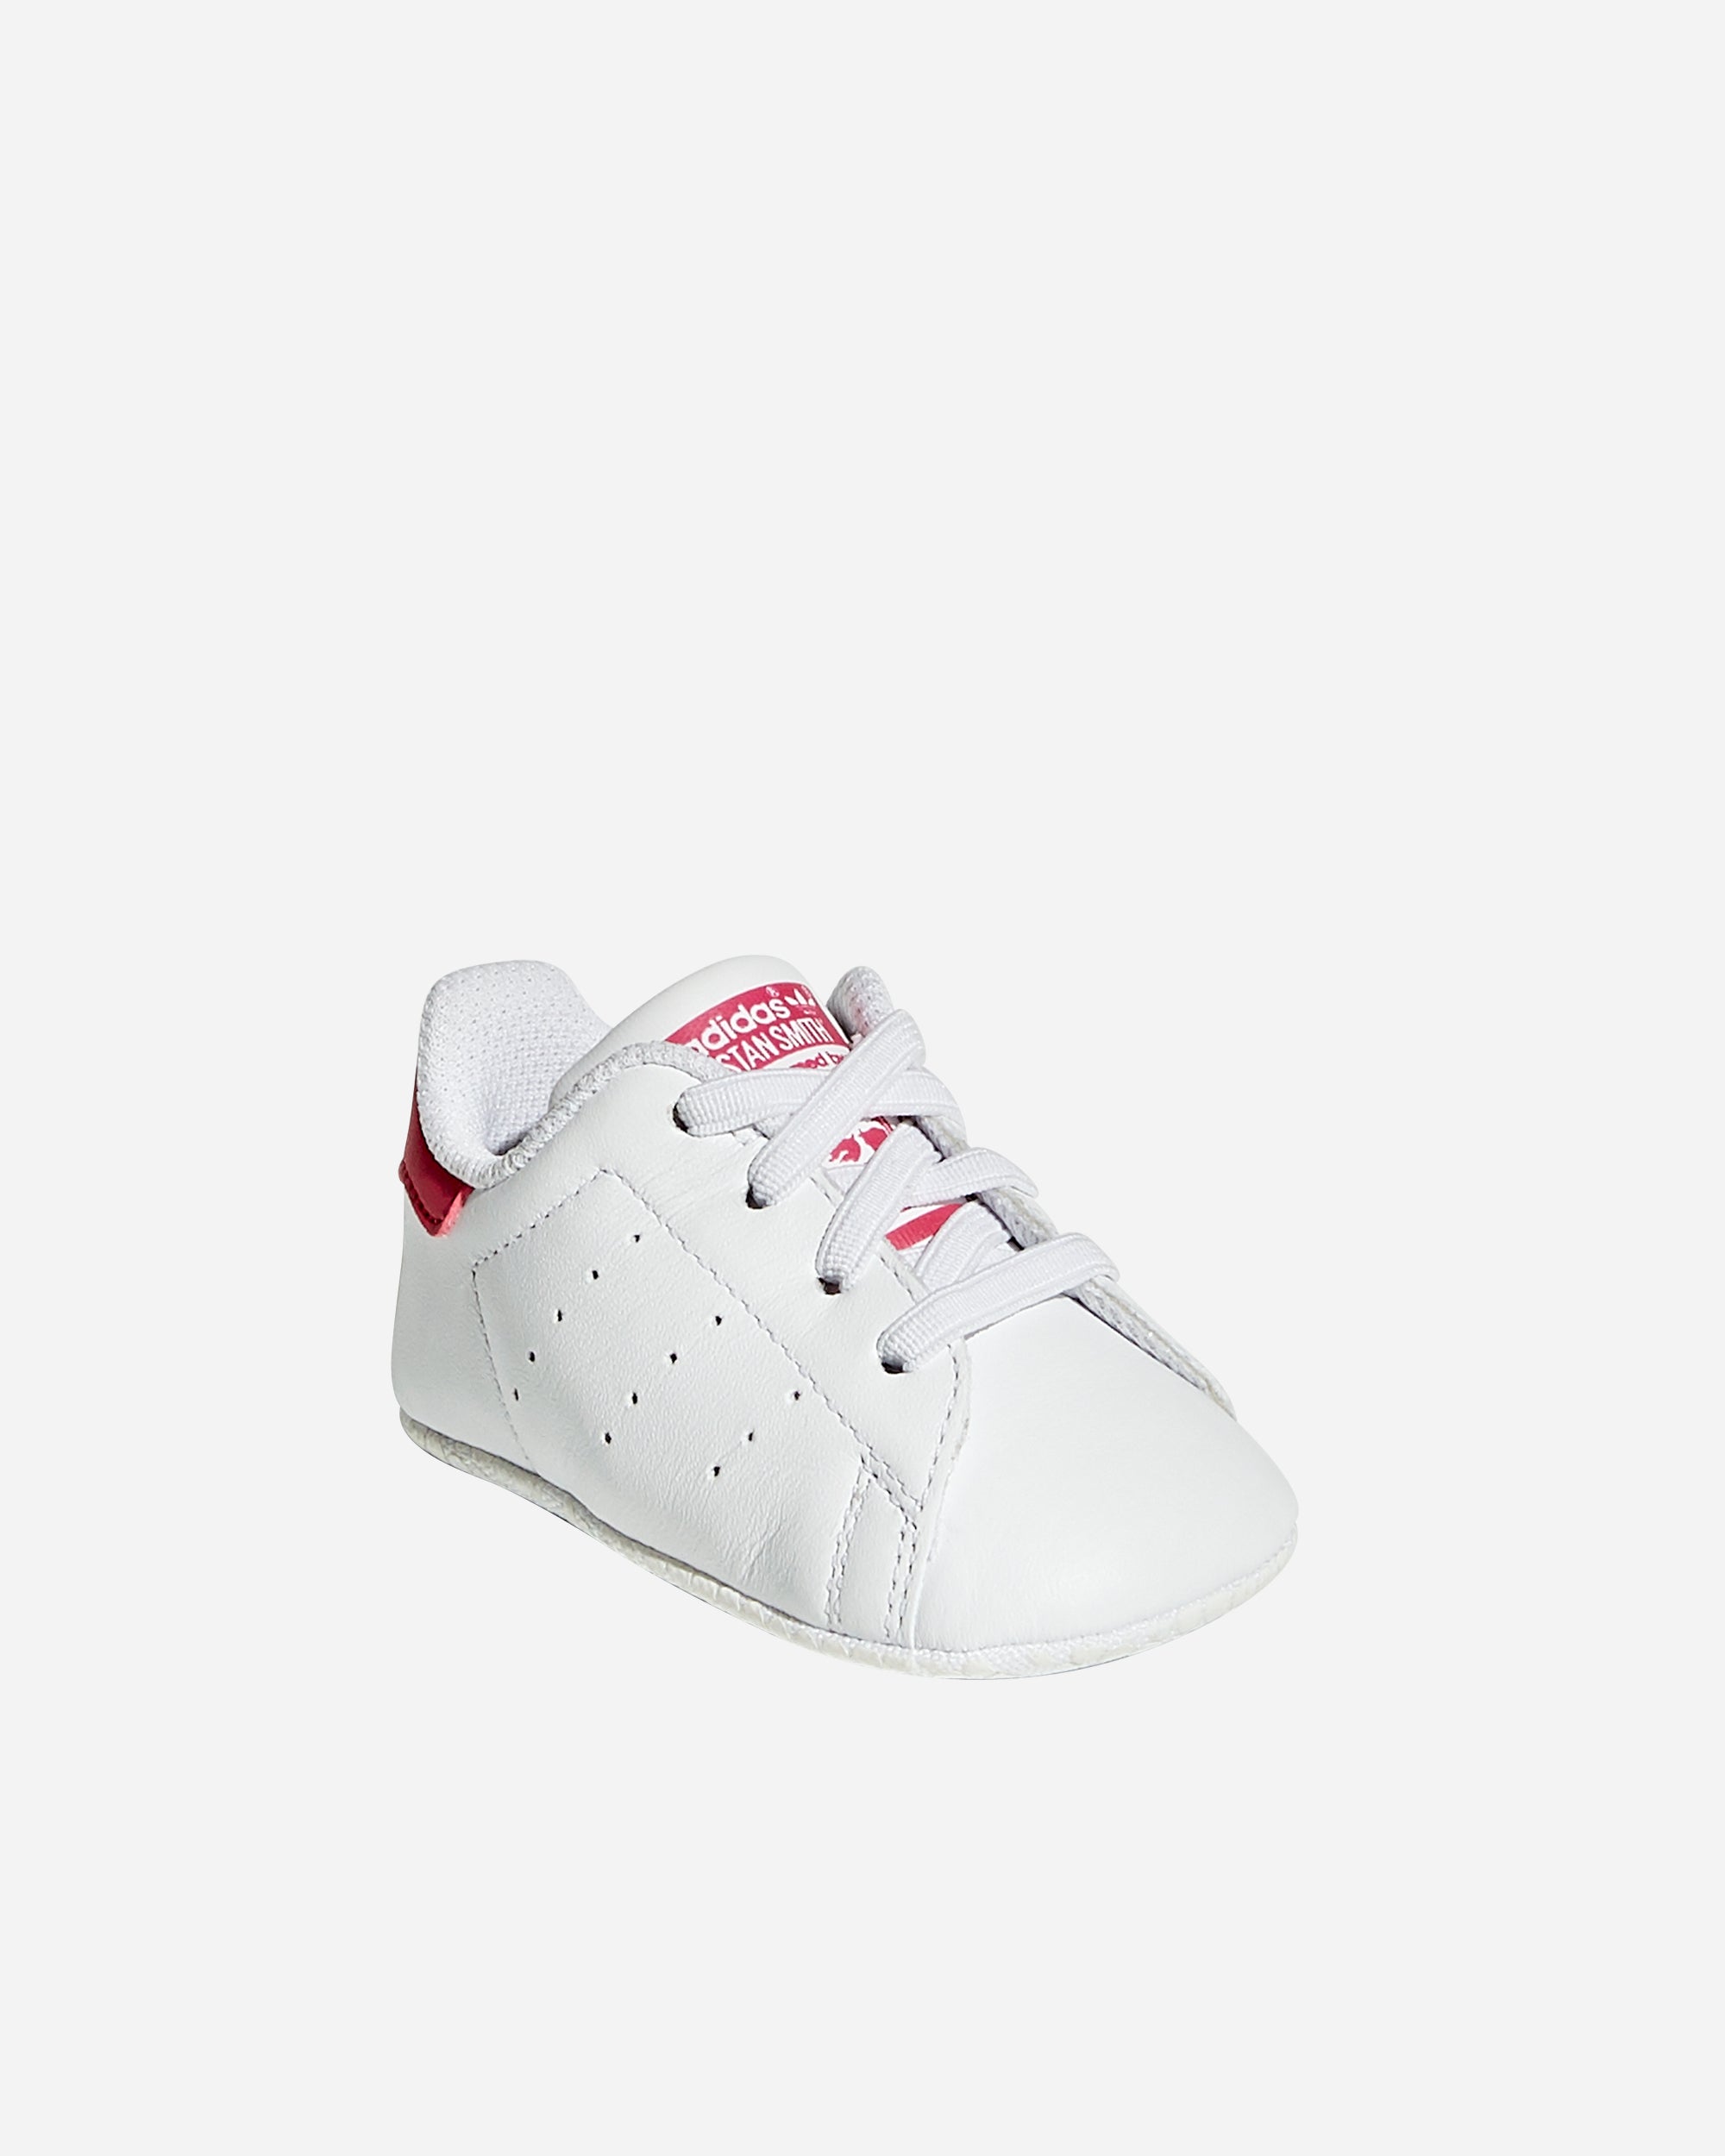 adidas Originals Stan Smith (Baby) White/Pink S82618